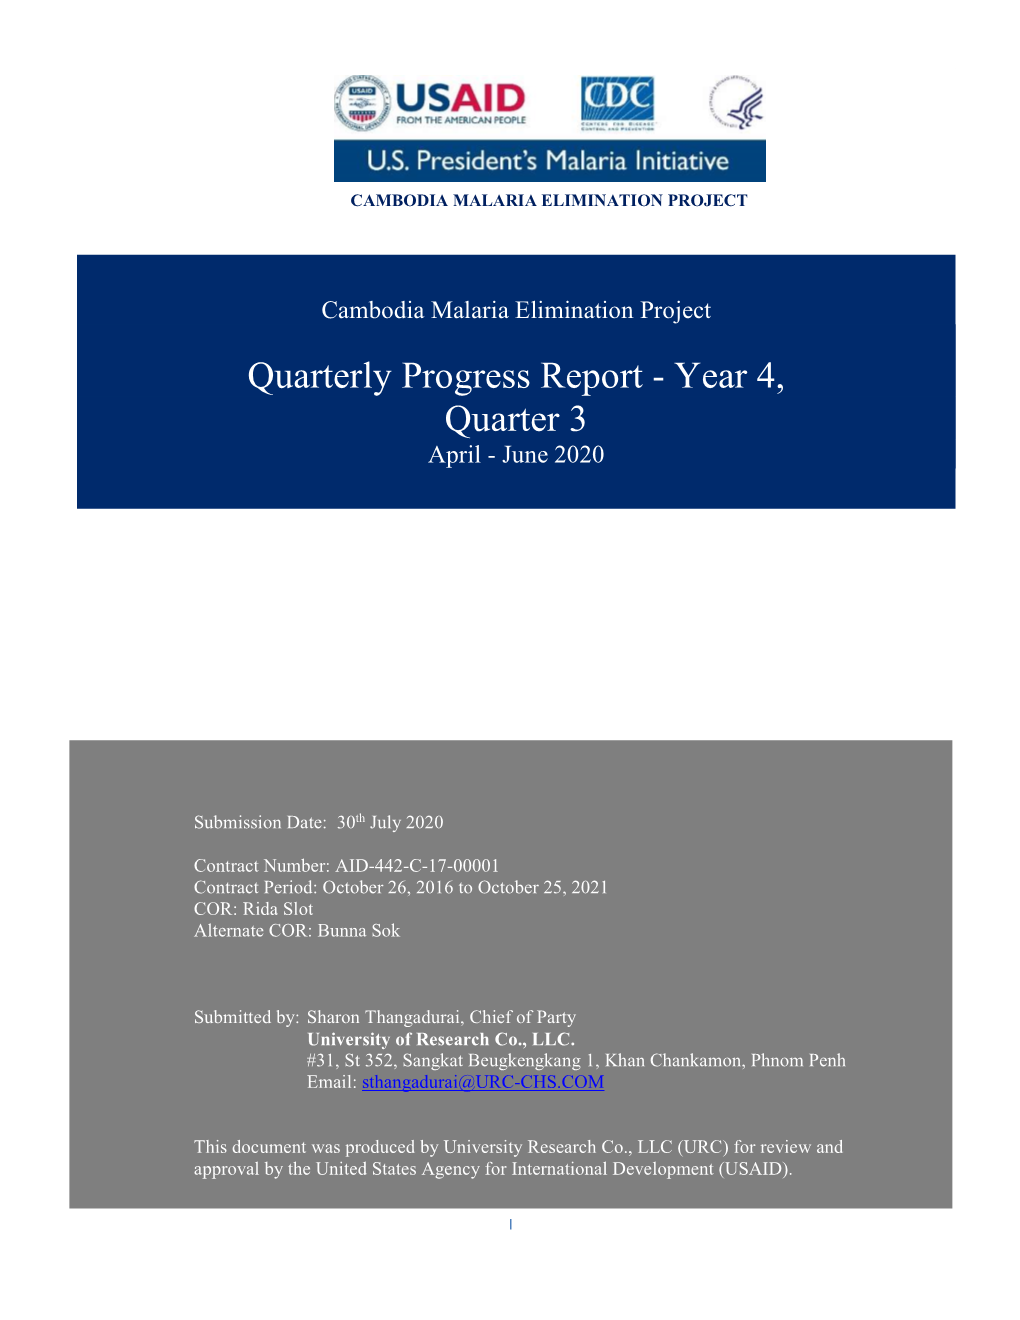 Quarterly Progress Report - Year 4, Quarter 3 April - June 2020